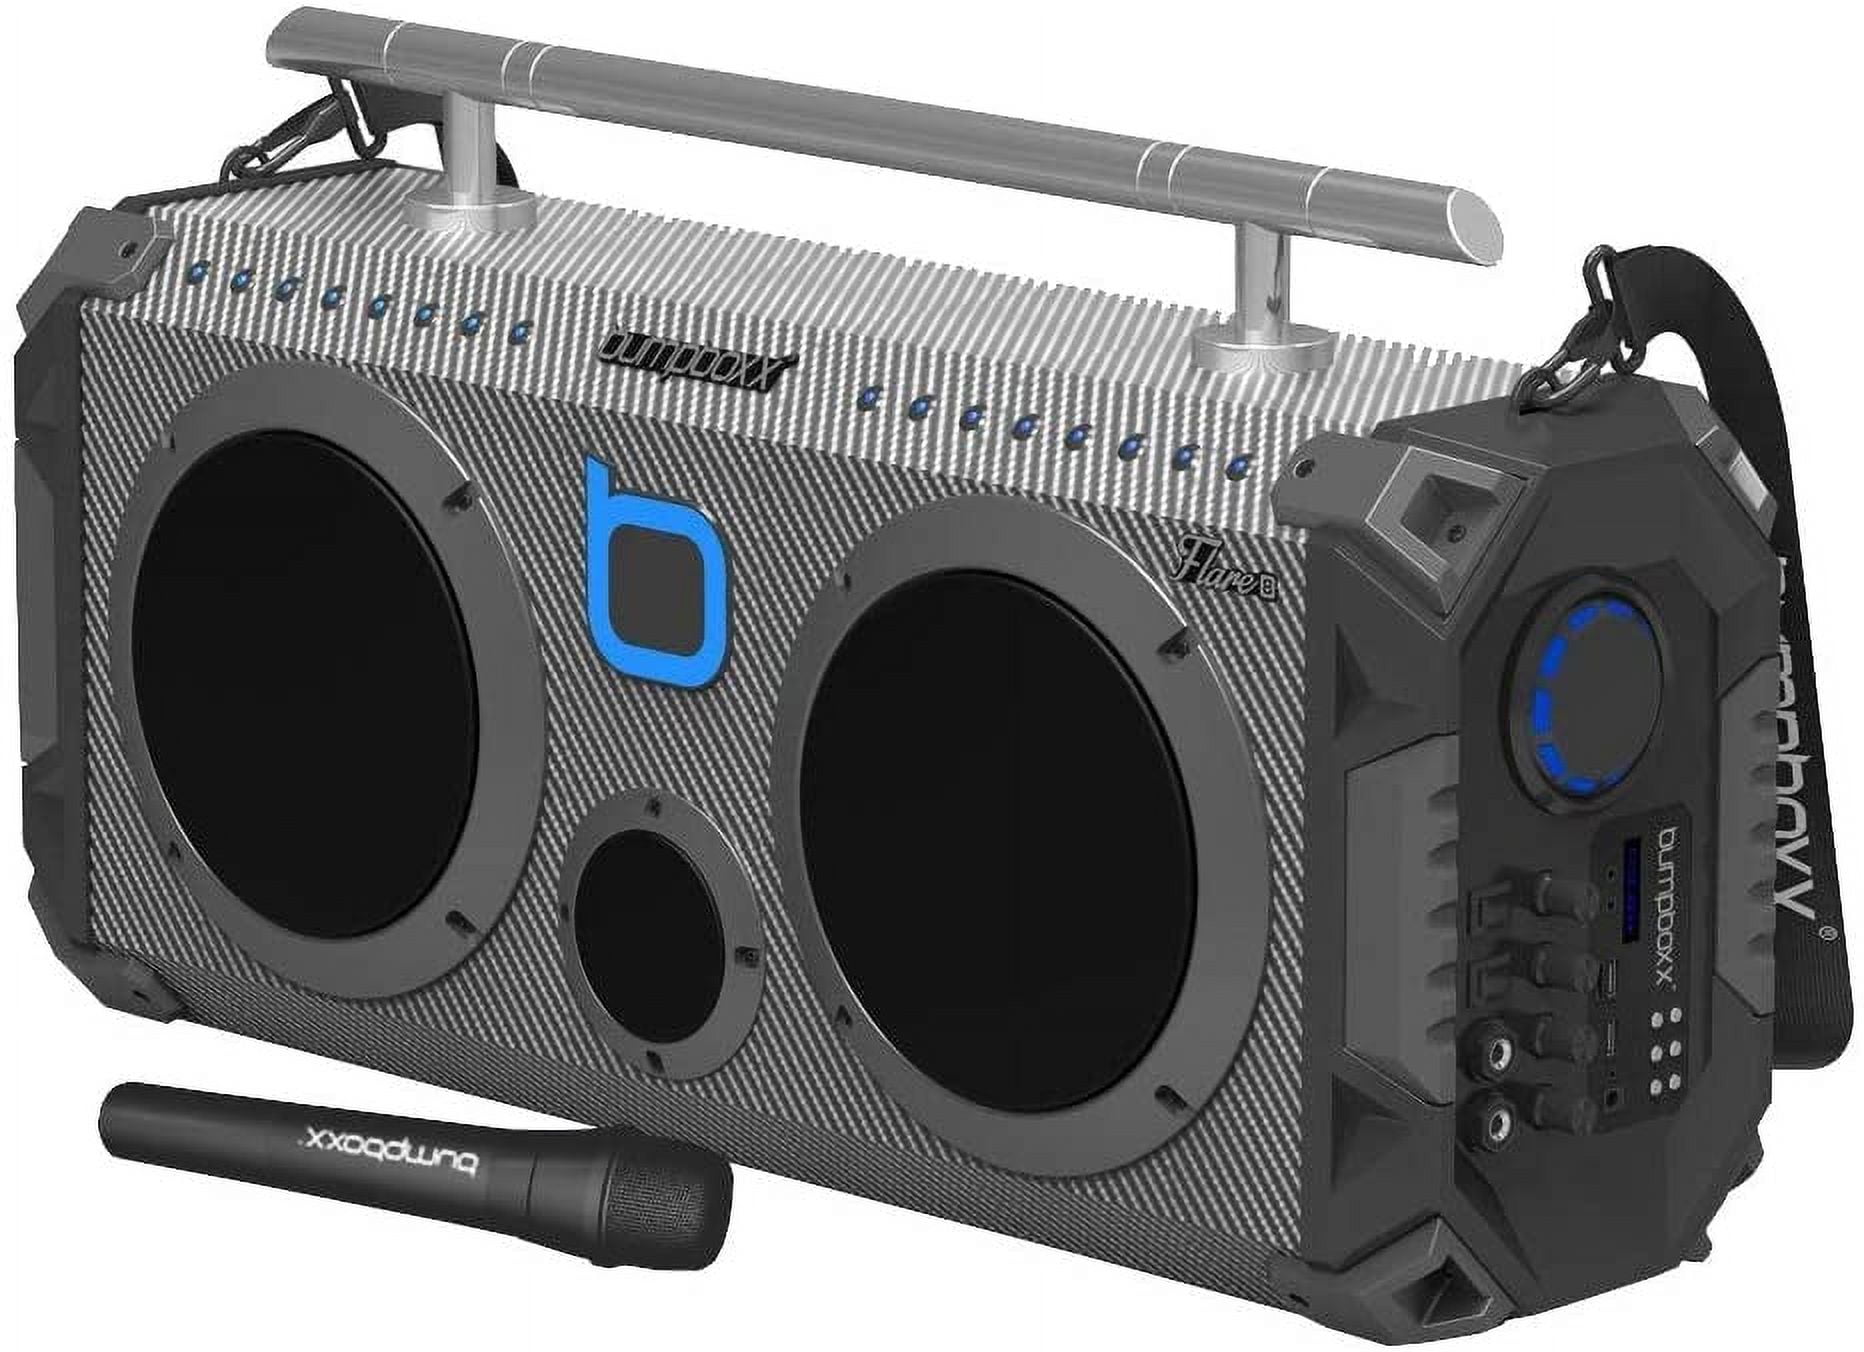 Bumpboxx Bluetooth Boombox Flare8 Black | Retro Boombox with